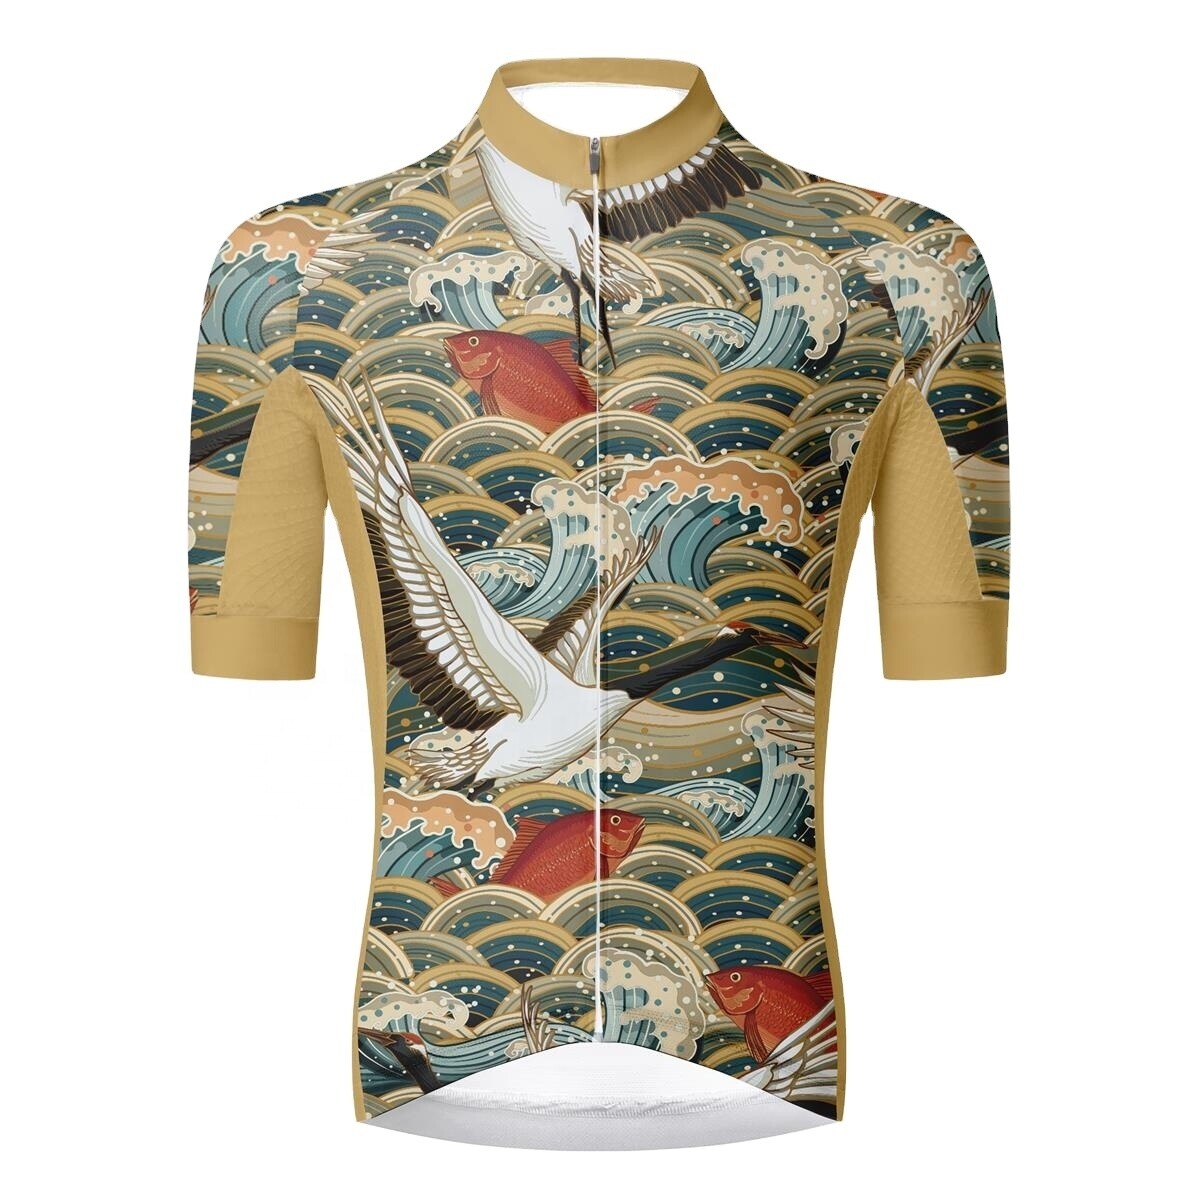 HIRBGOD Mens Pro Cycling Jersey Best Shirts Dye Sublimation Print Bike Wear